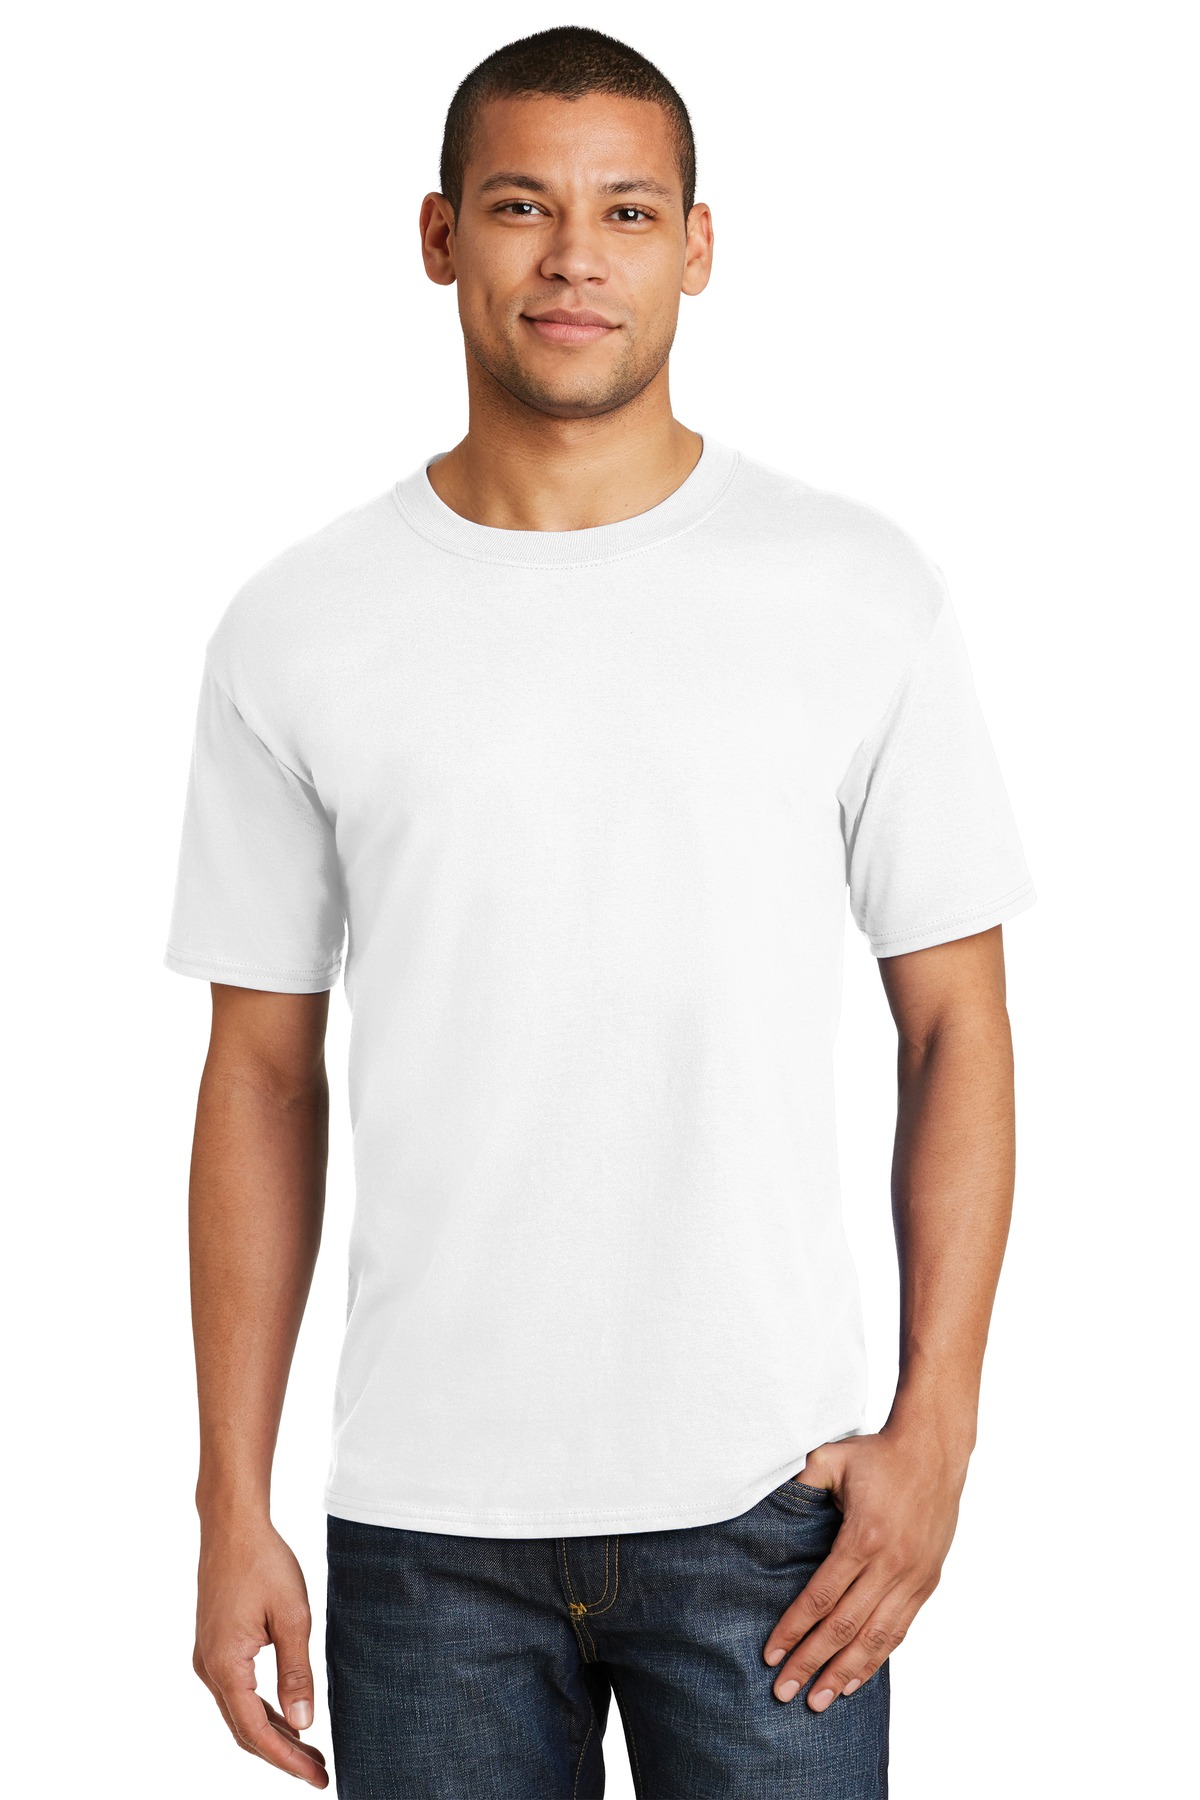 Hanes Beefy-T - 100% Cotton T-Shirt-Hanes